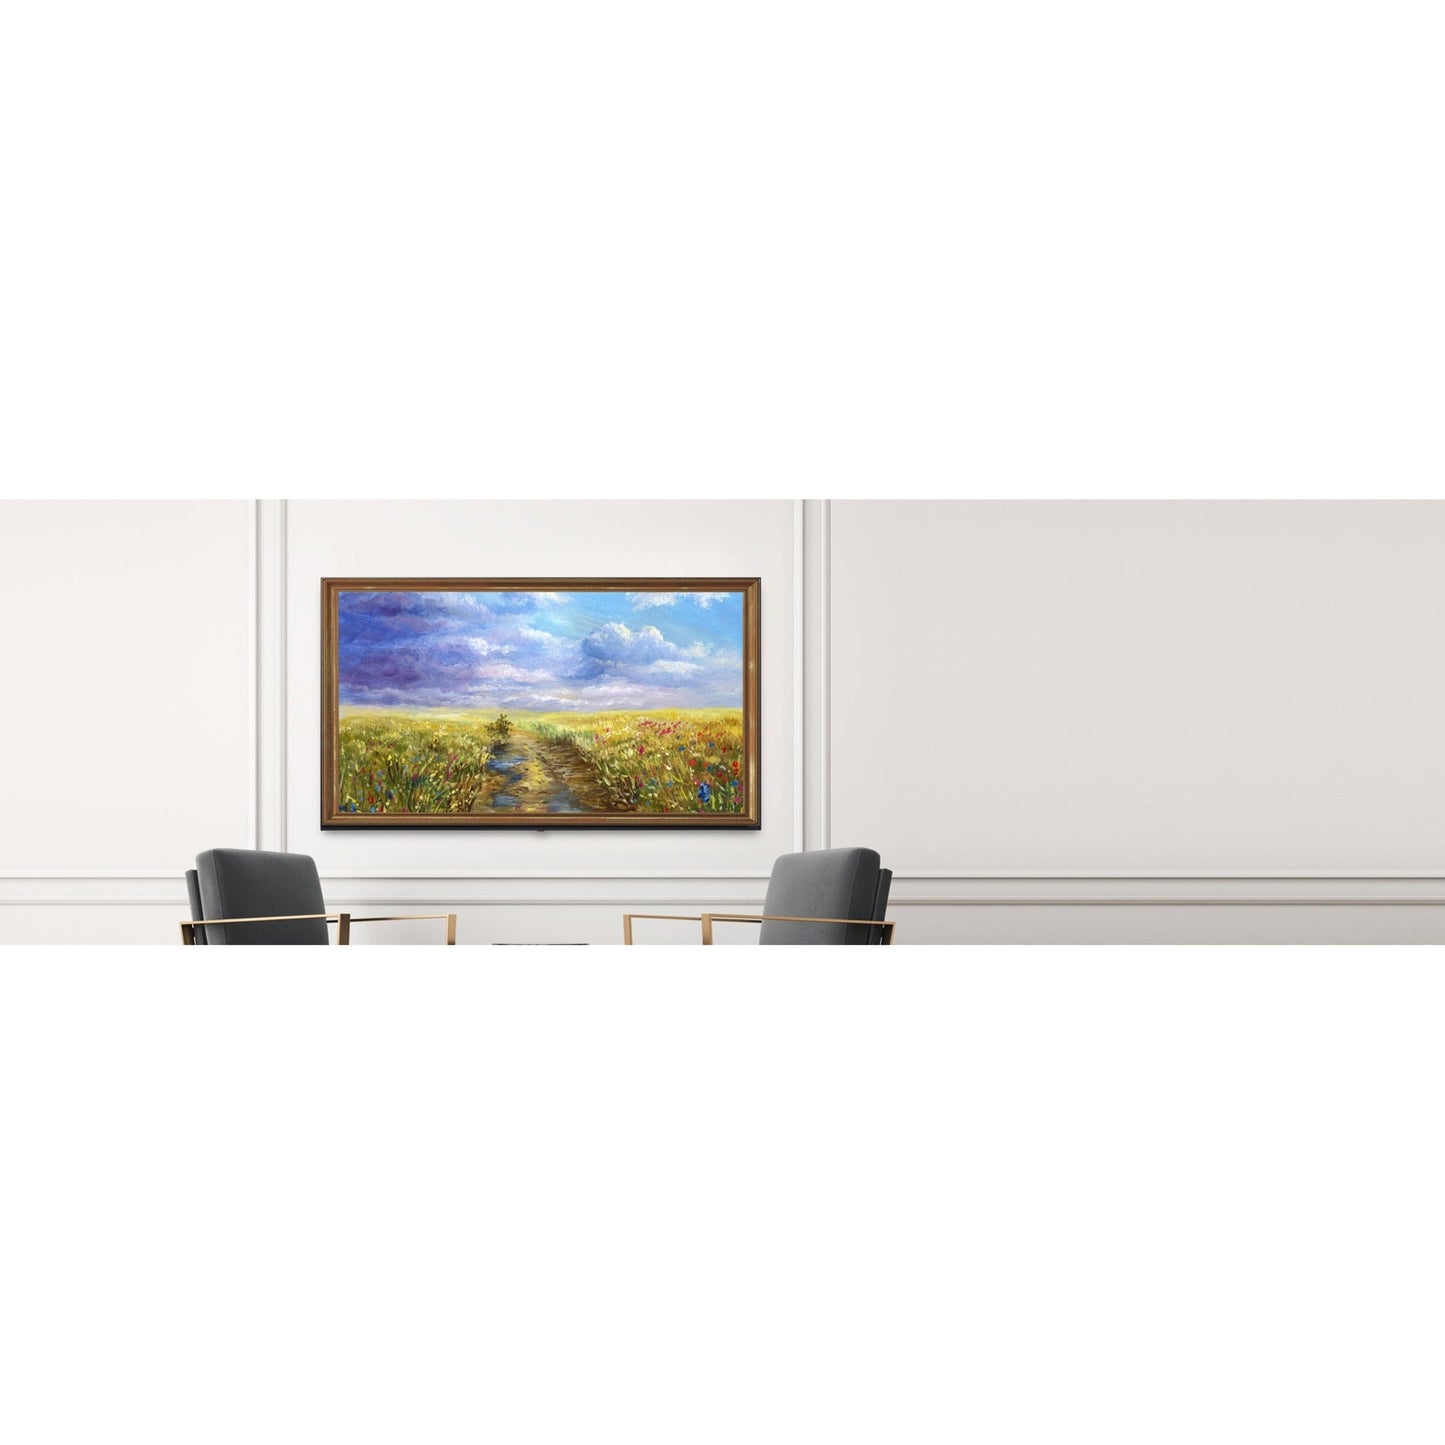 LG Hospitality UR577H9 50UR567H9UA 50" Smart LED-LCD TV - 4K UHDTV